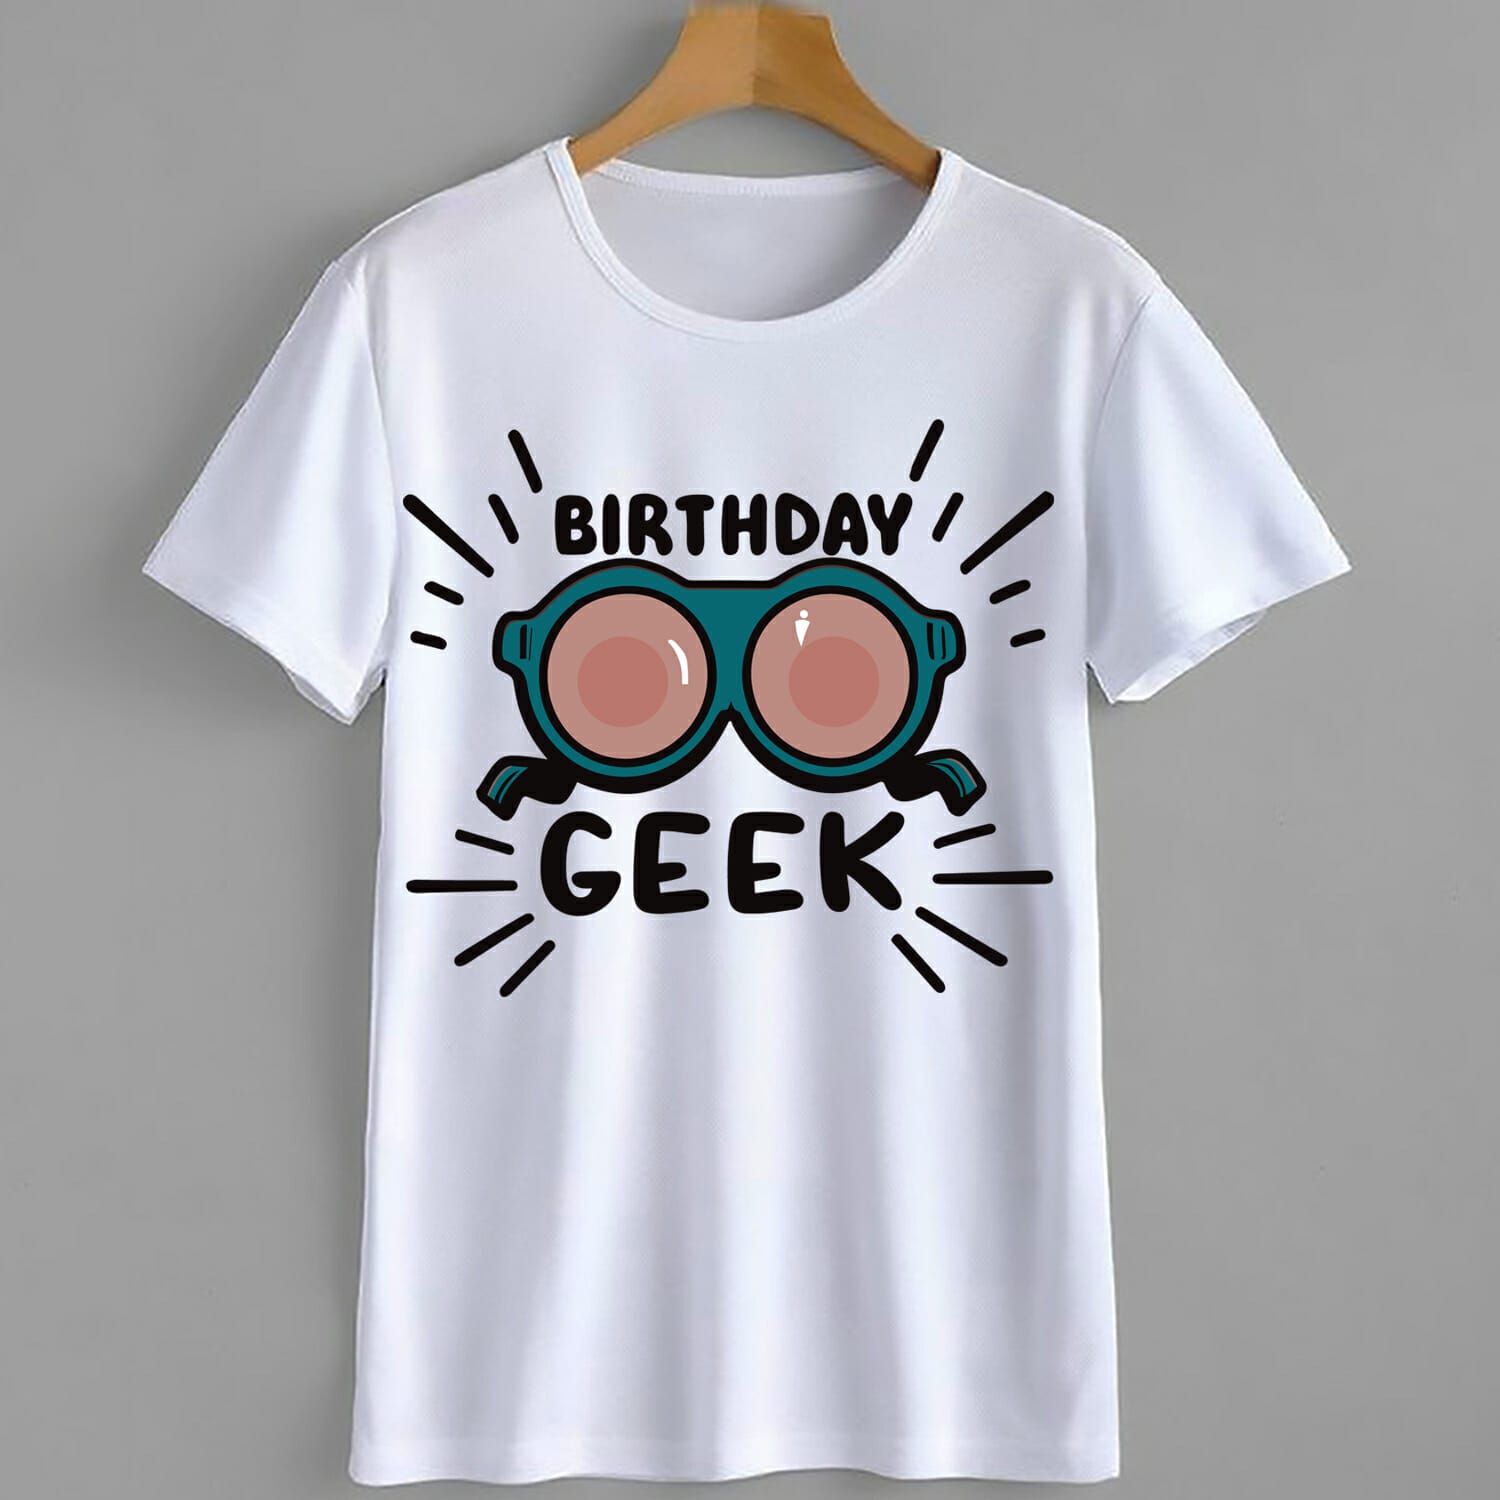 Birthday Geek Glasses T-Shirt Design